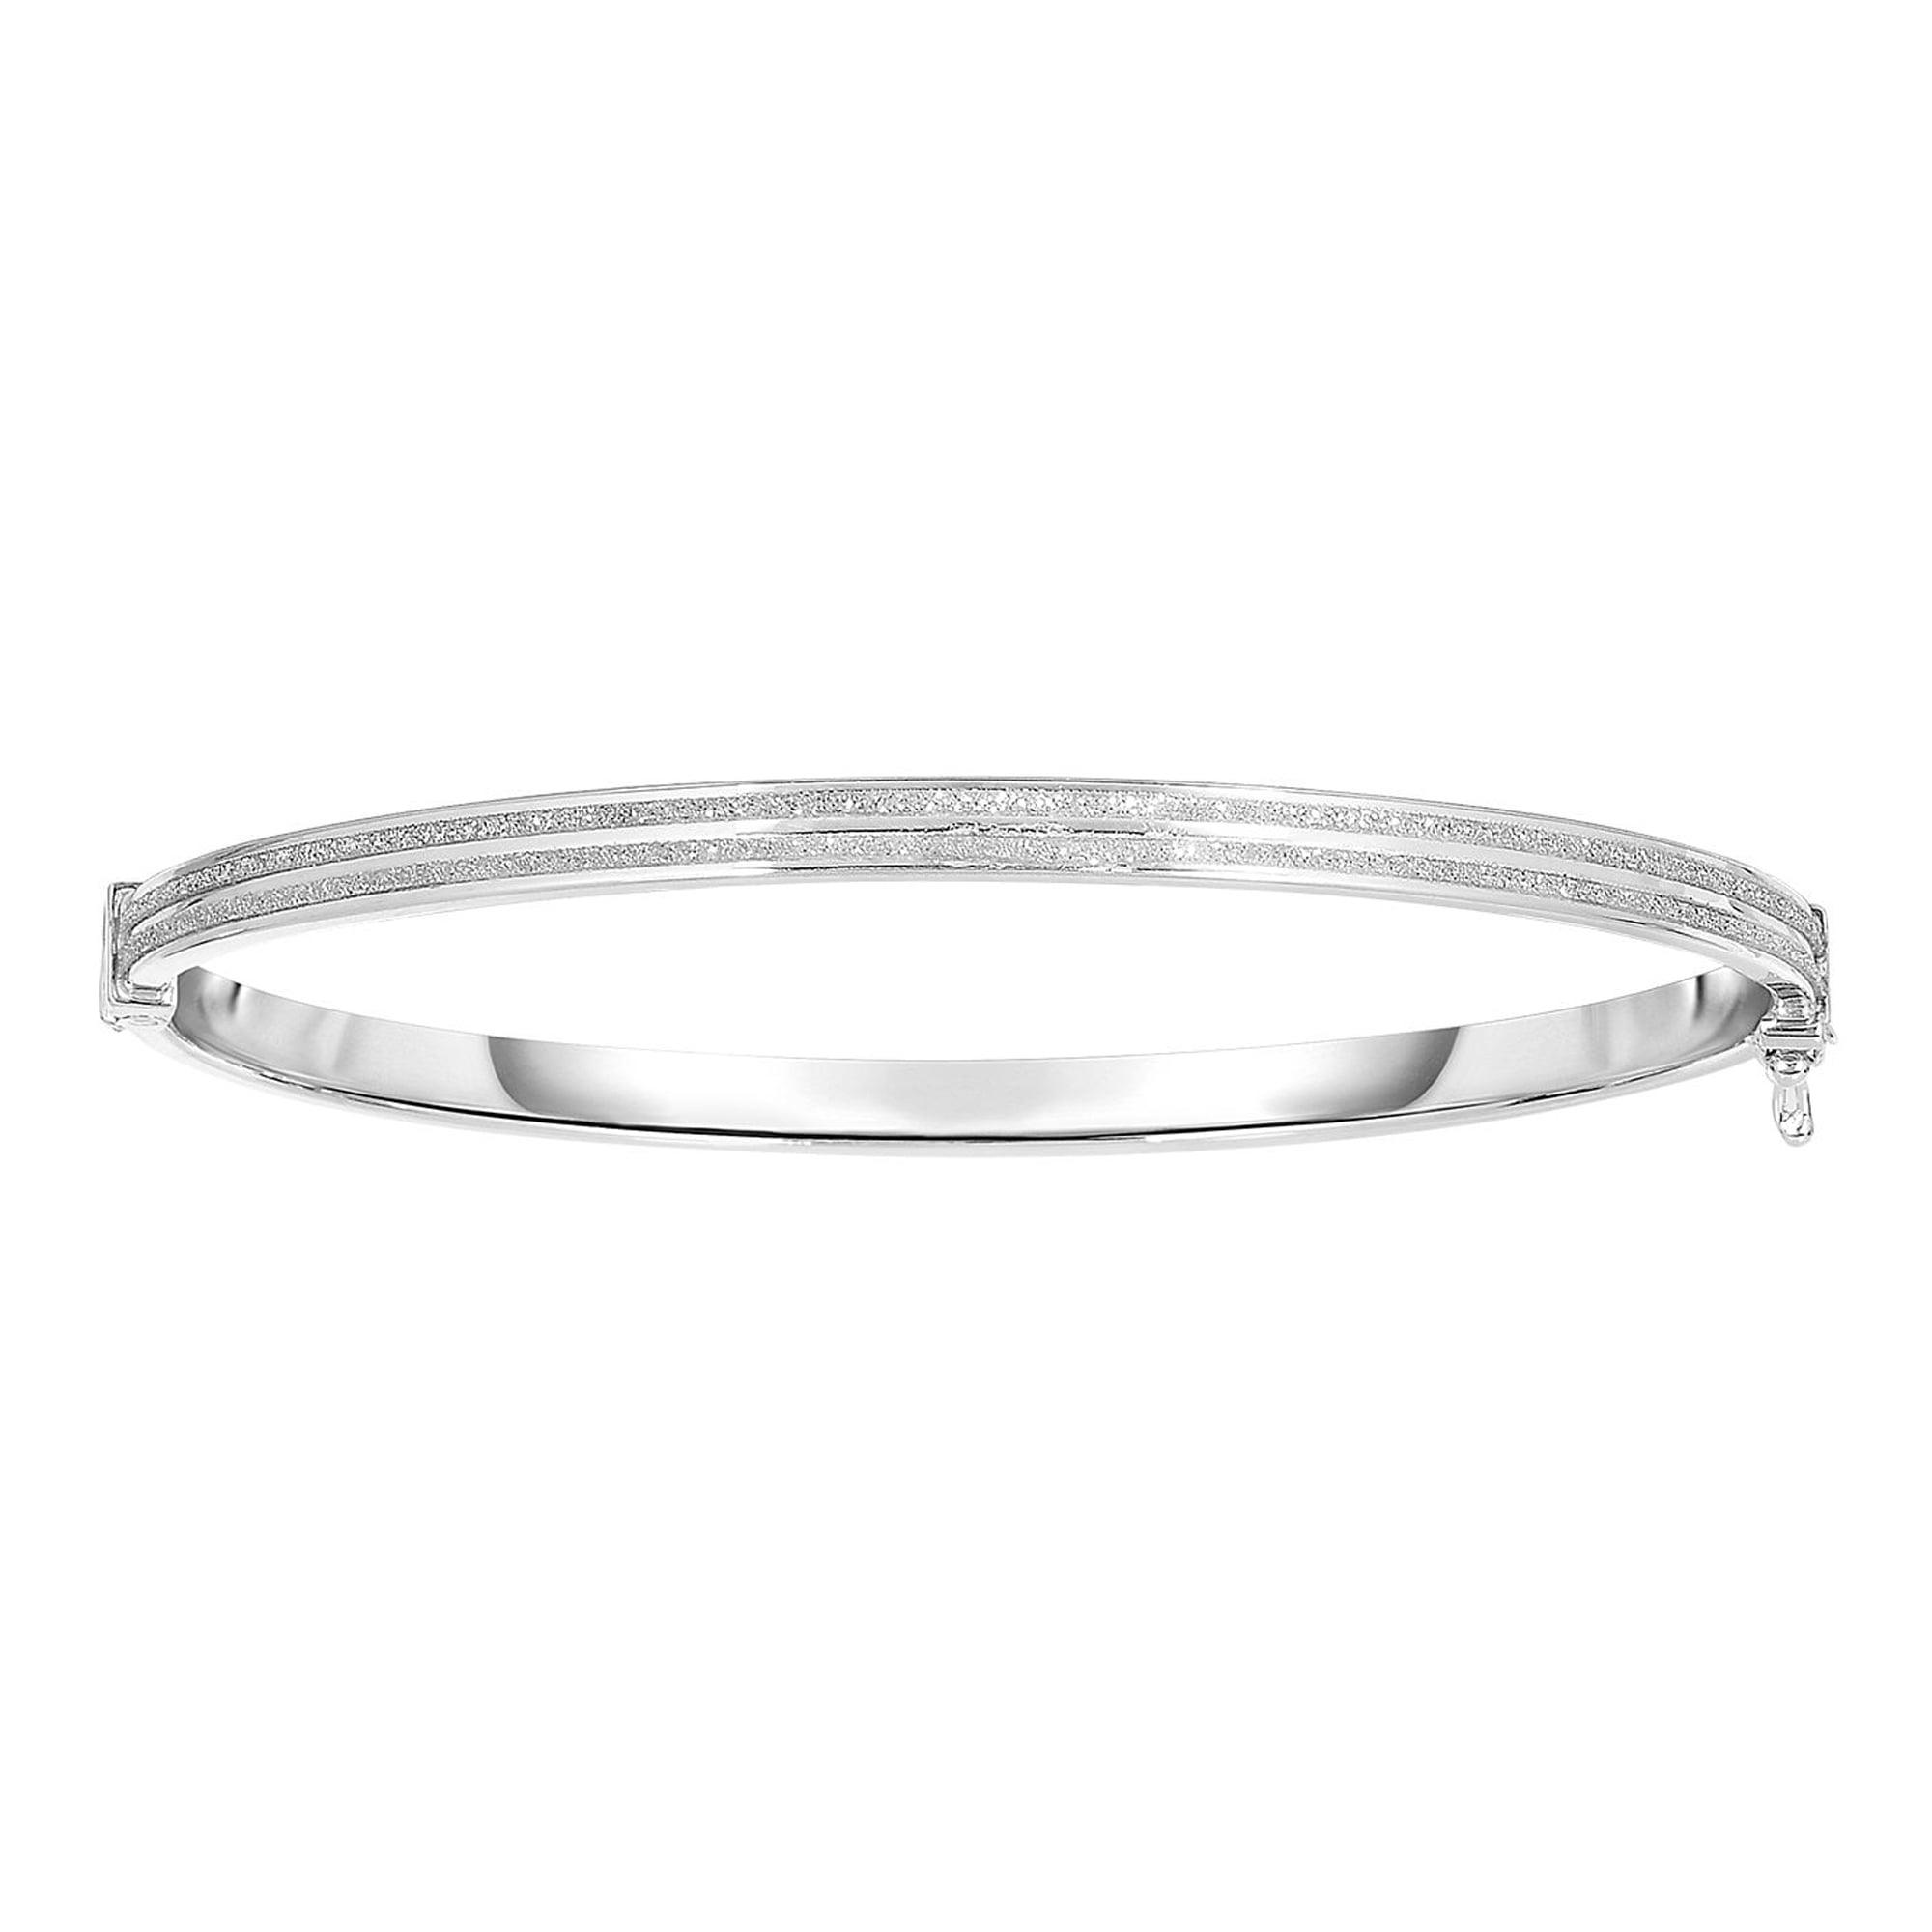 Angelica 7.25 Inches Engravable Bangle Bracelet Adjustable